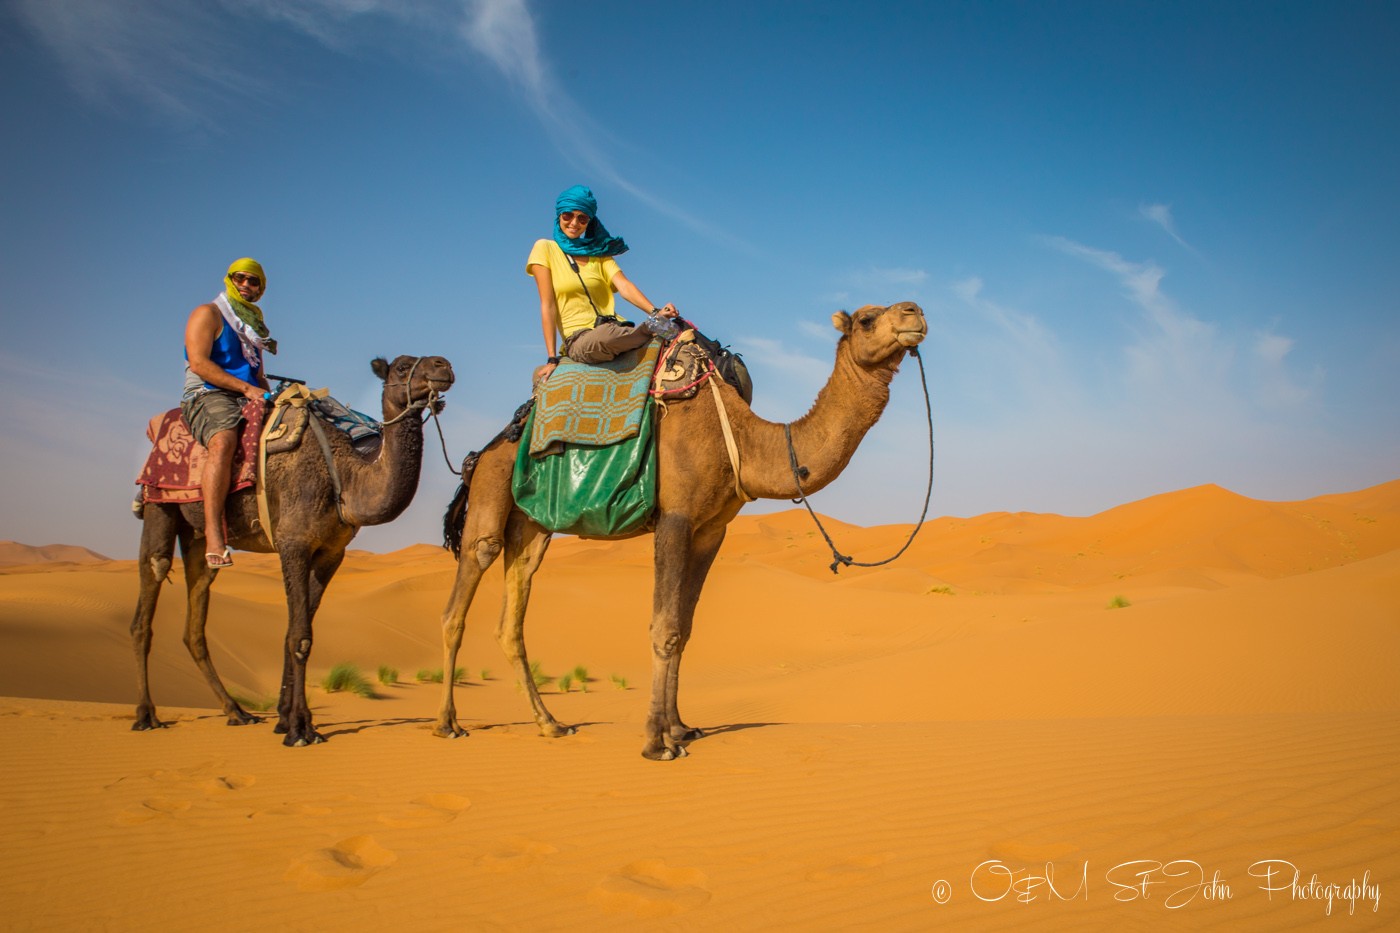 Max and Oksana in Erg Chebbi, Sahara Desert. Morocco, off the grid vacation